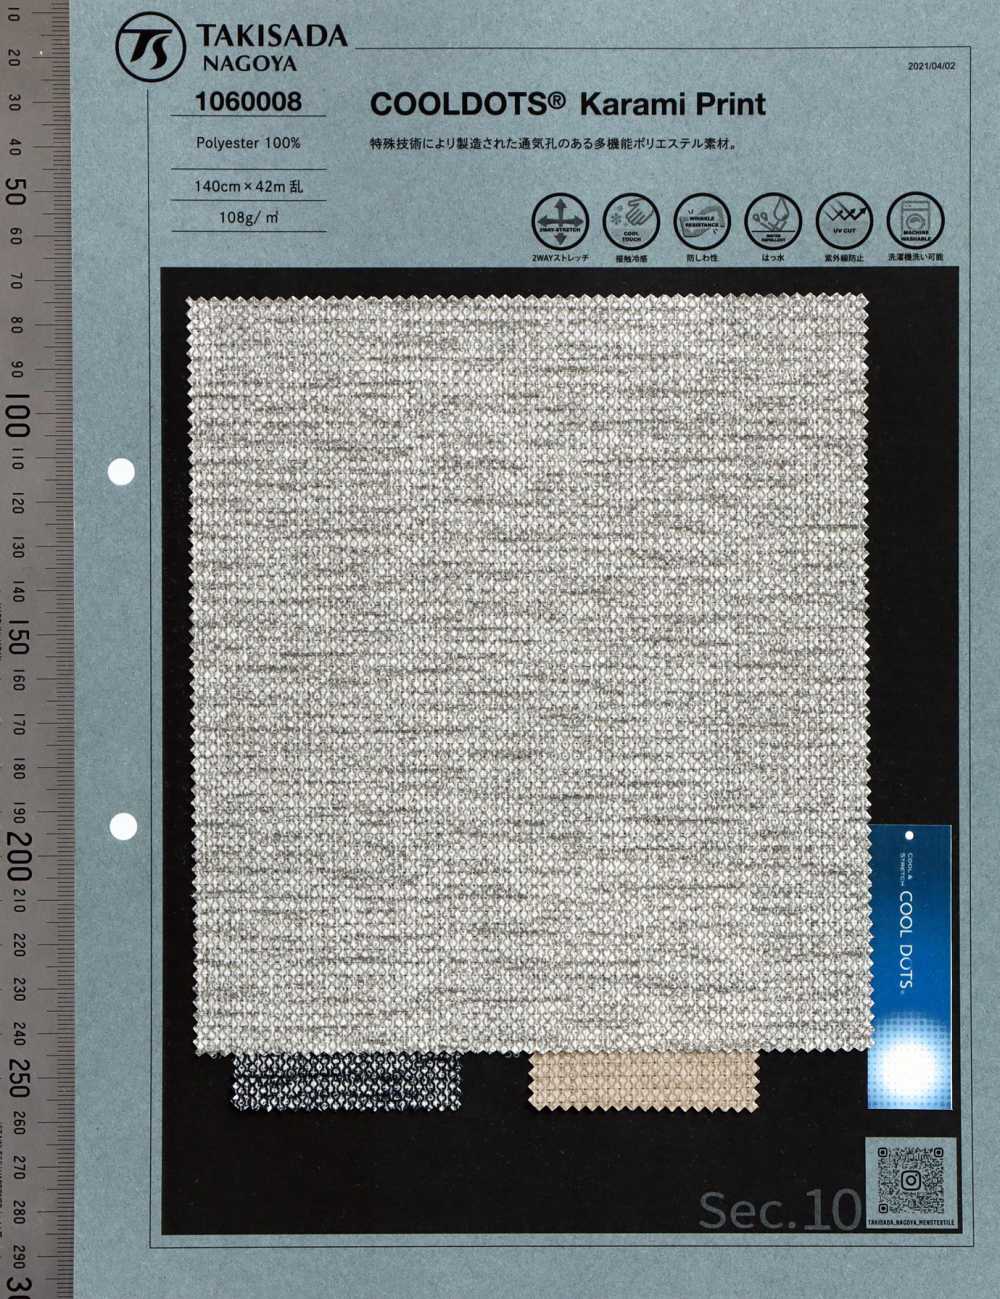 1060008 COOLOTS-Druck Im Dreherbindungsstil[Textilgewebe] Takisada Nagoya